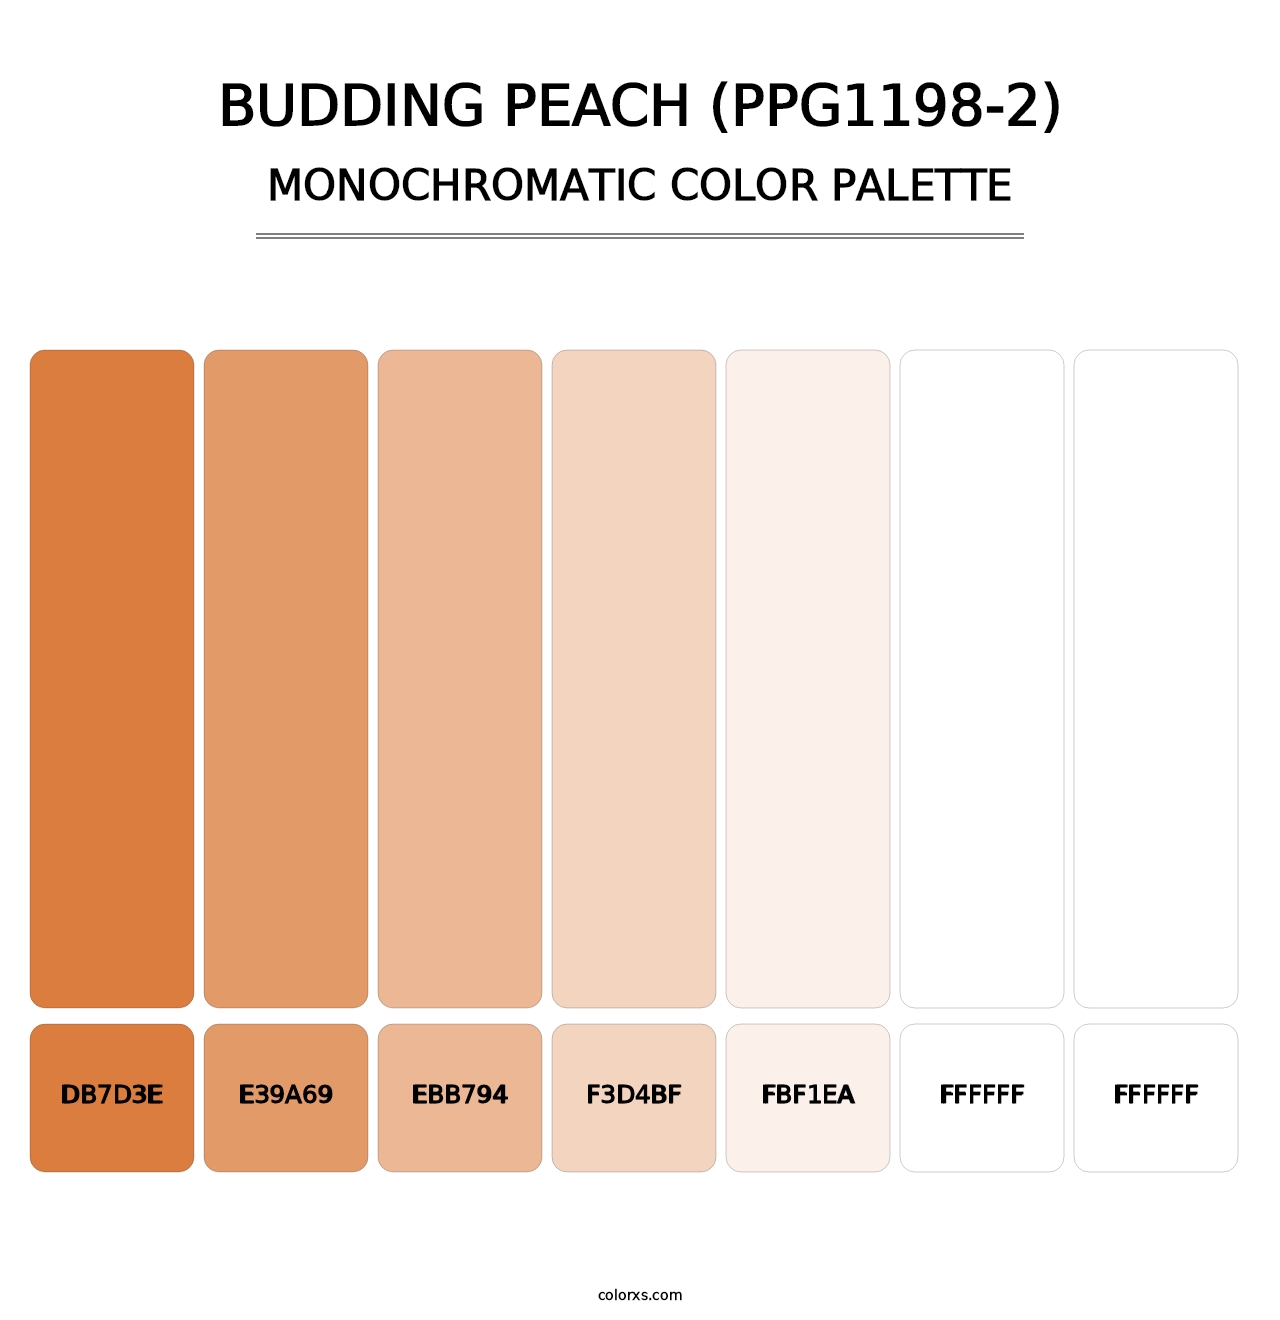 Budding Peach (PPG1198-2) - Monochromatic Color Palette